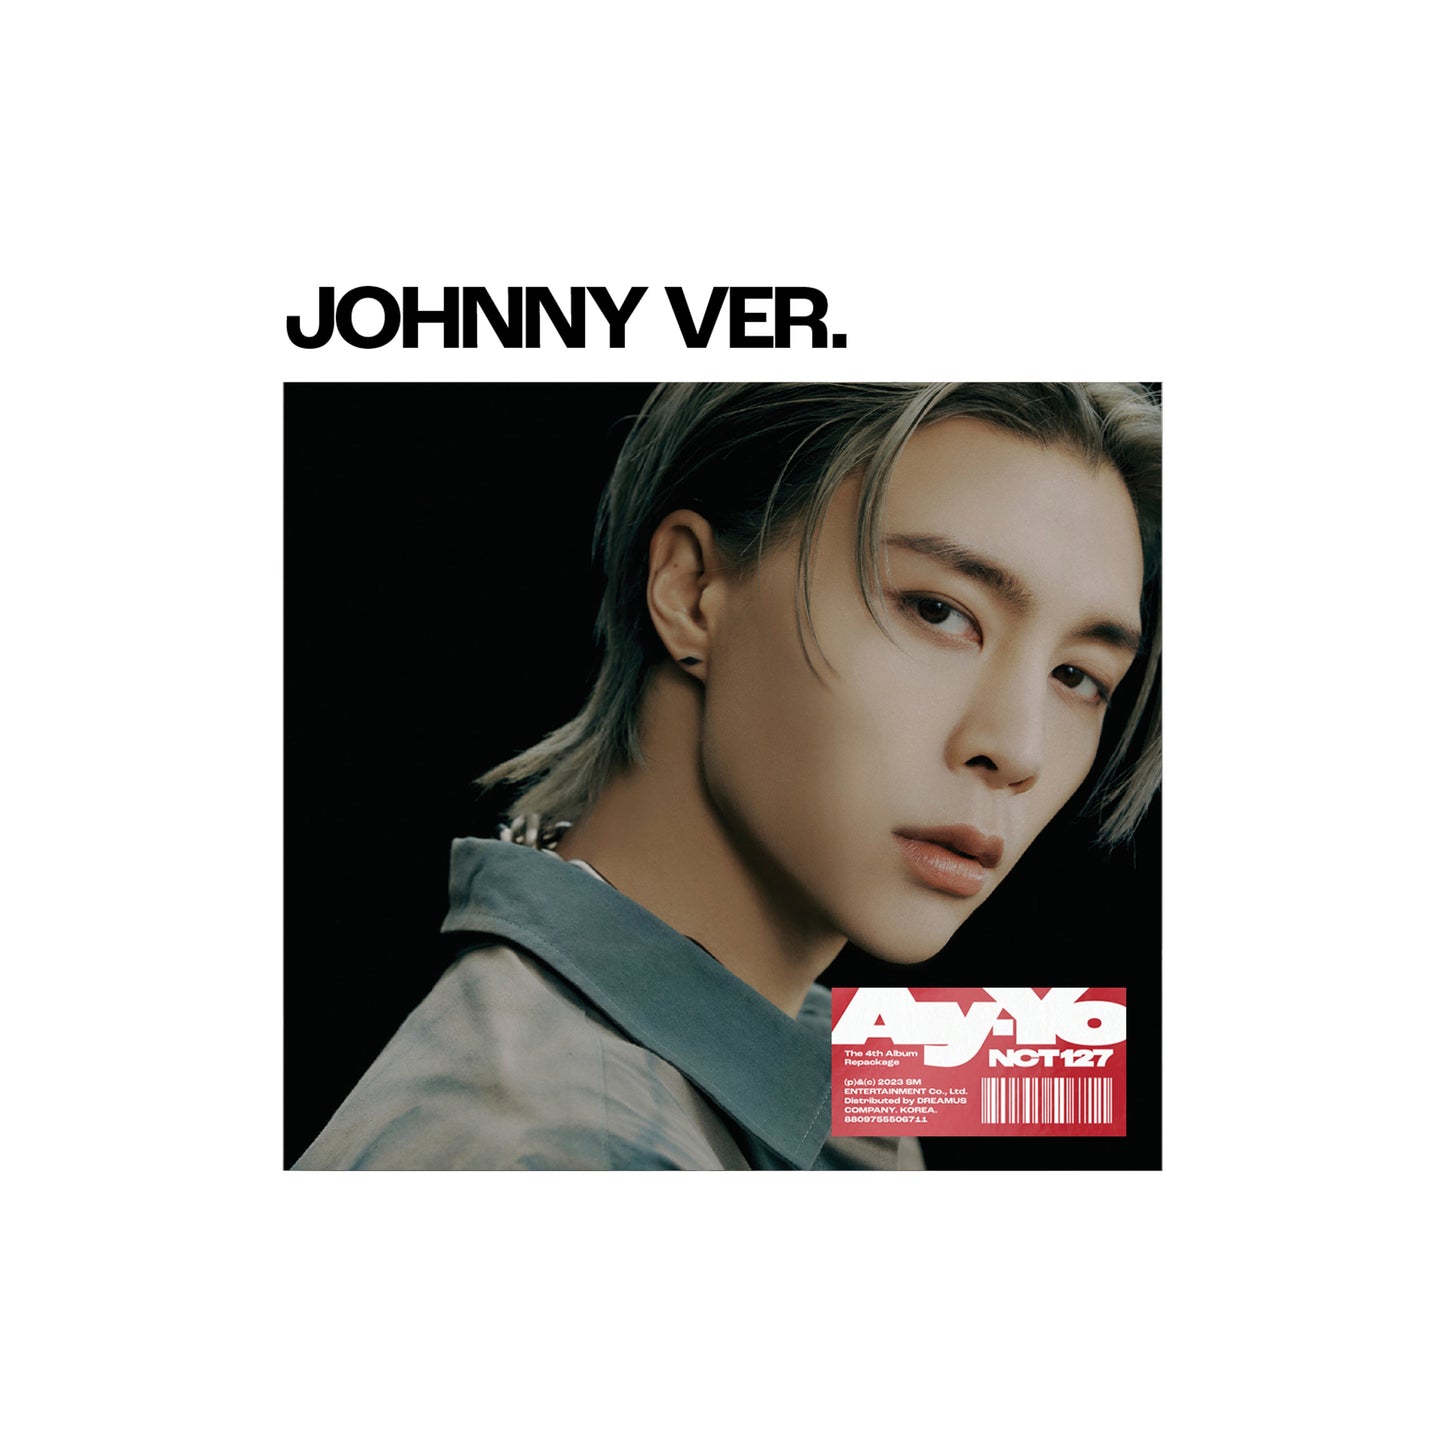 NCT 127 4TH ALBUM REPACKAGE 'AY-YO' (DIGIPACK) JOHNNY VERSION COVER